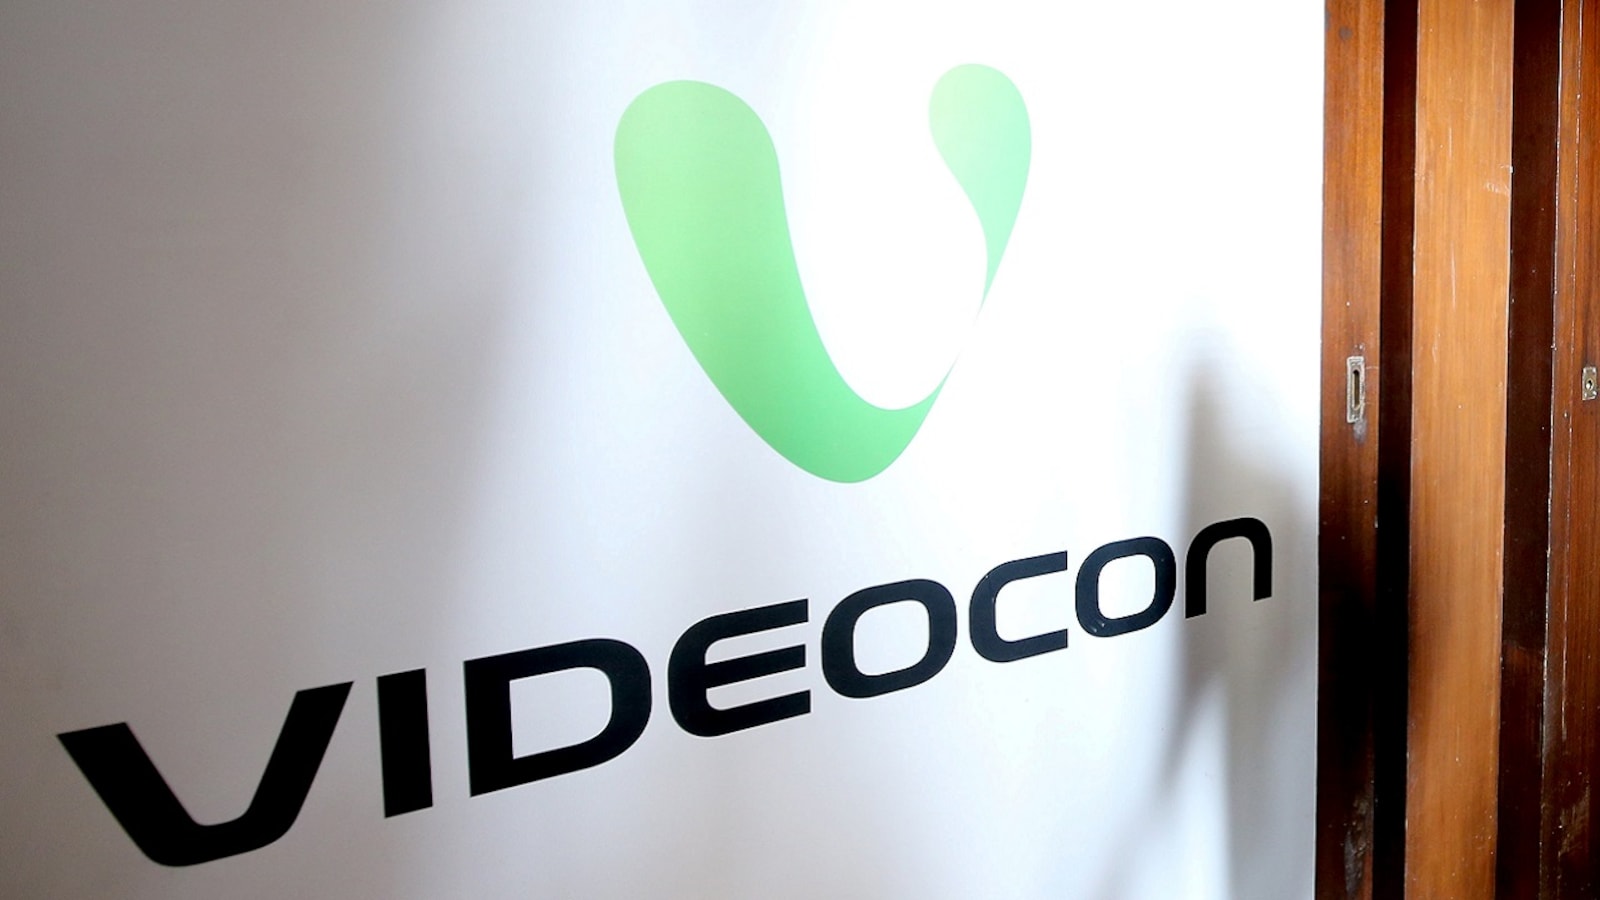 videocon mobile logo